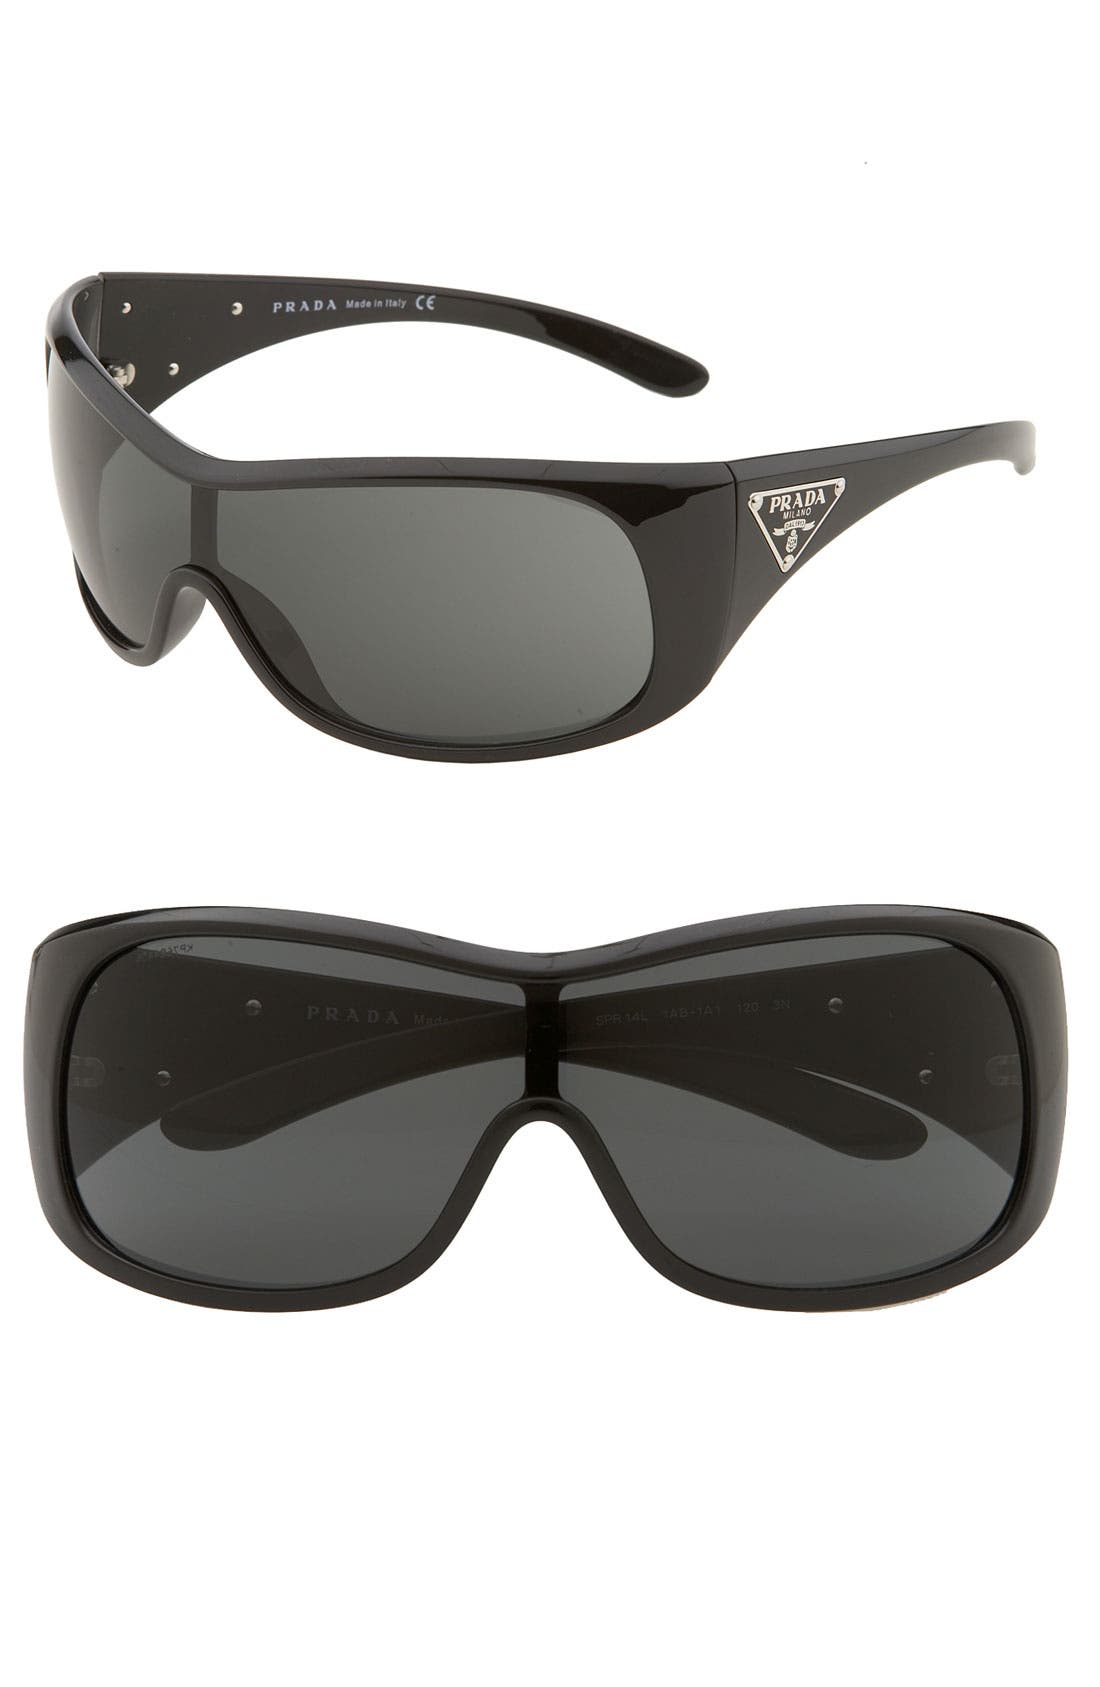 prada shield sunglasses with triangle logo